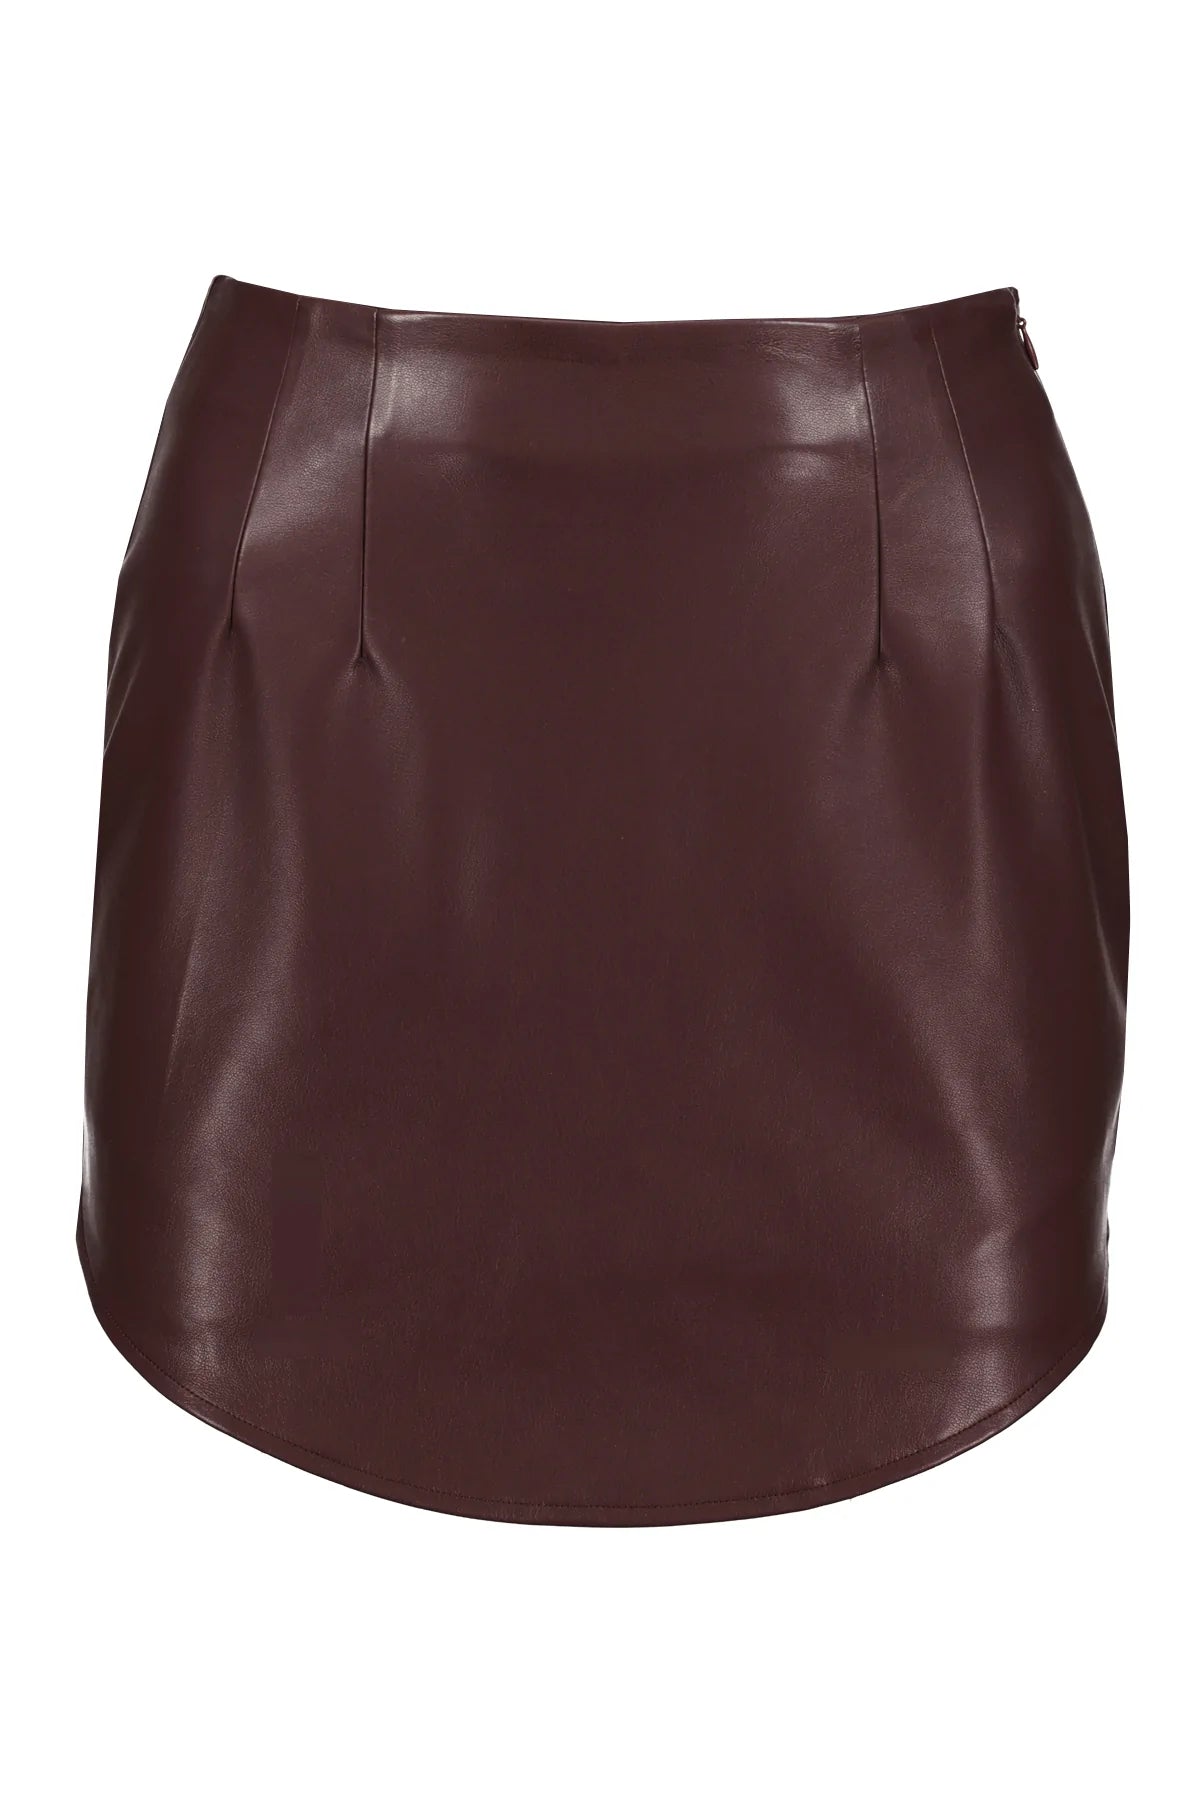 Foxy Vegan Leather Marcela Skirt